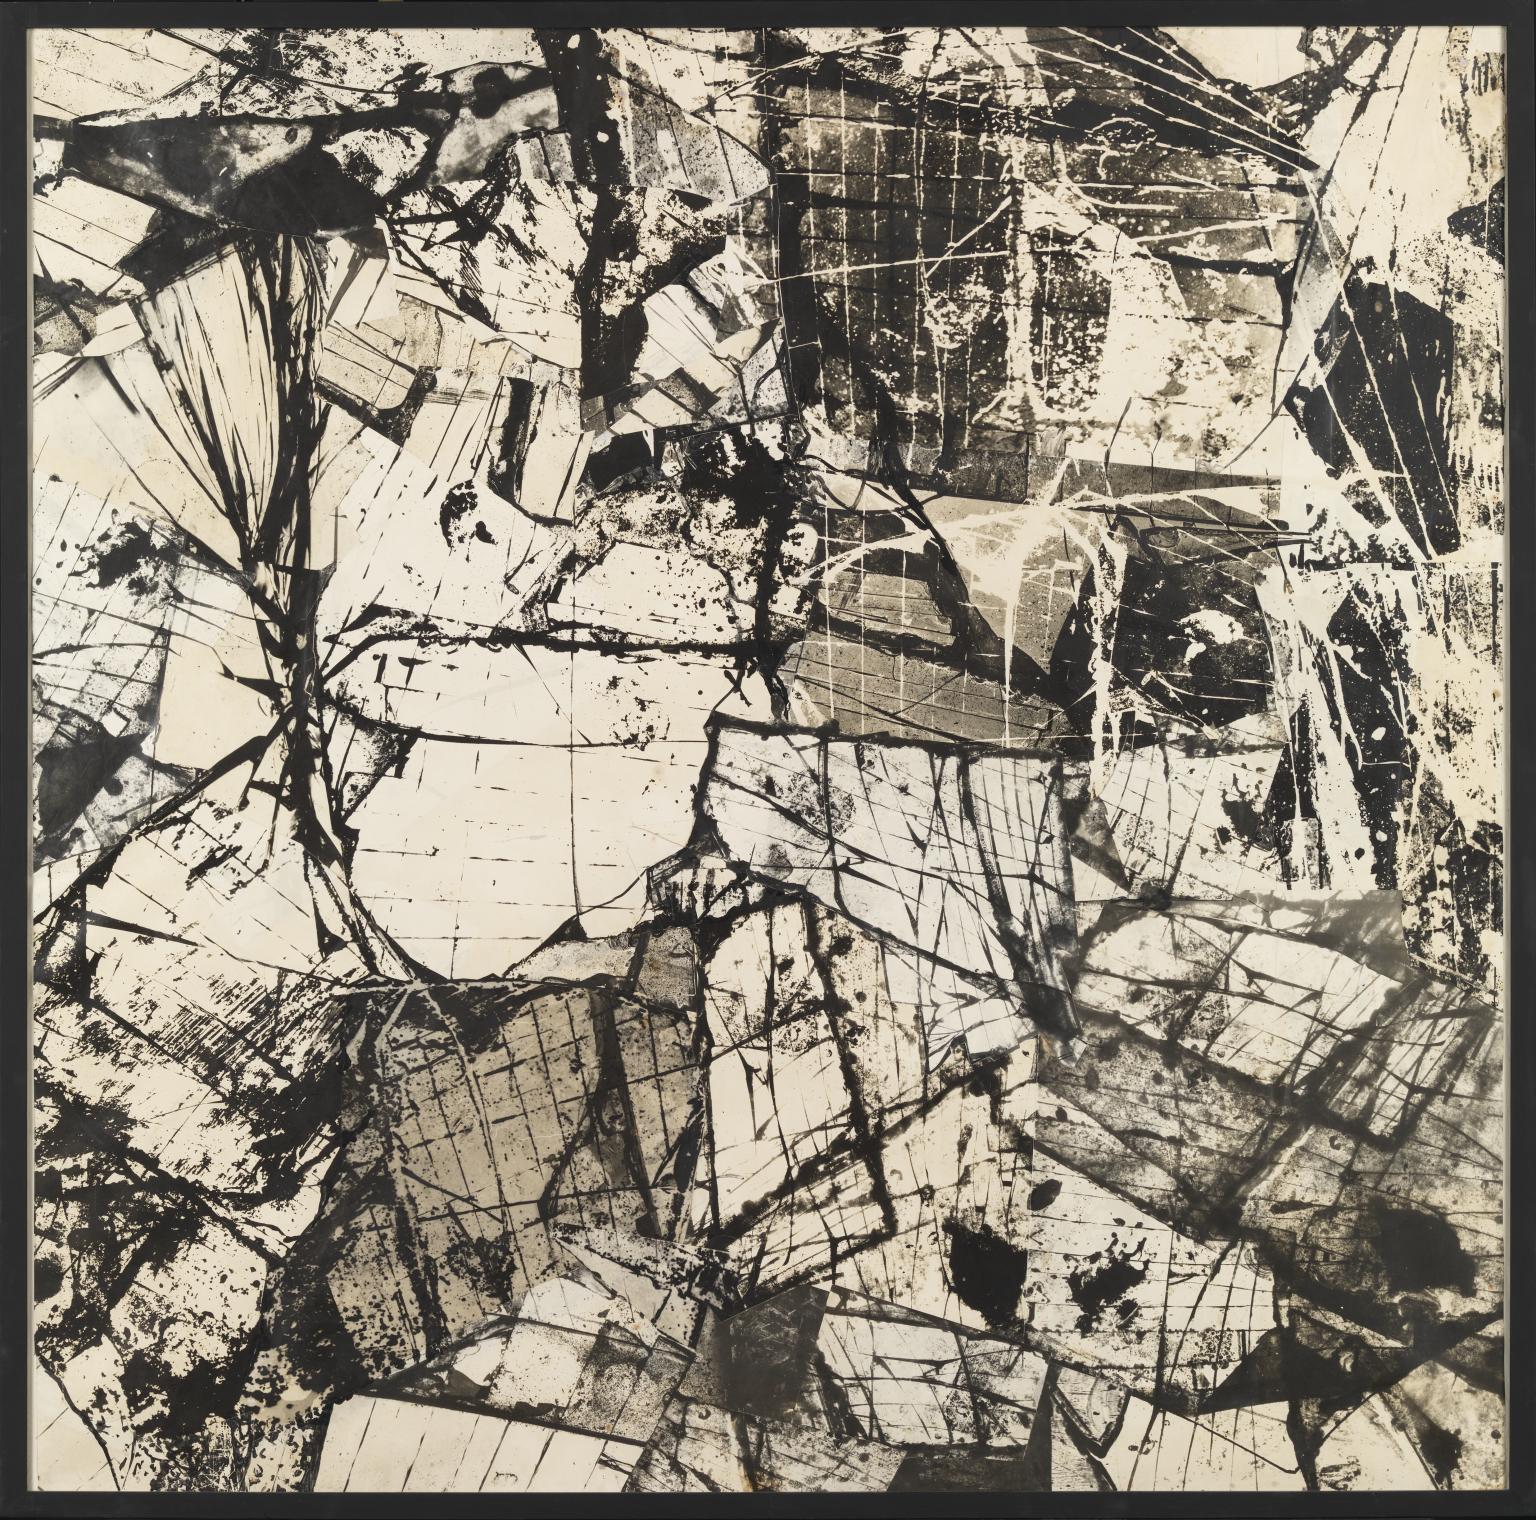 Untitled No. 8 (Shattered Glass)', Nigel Henderson, 1959